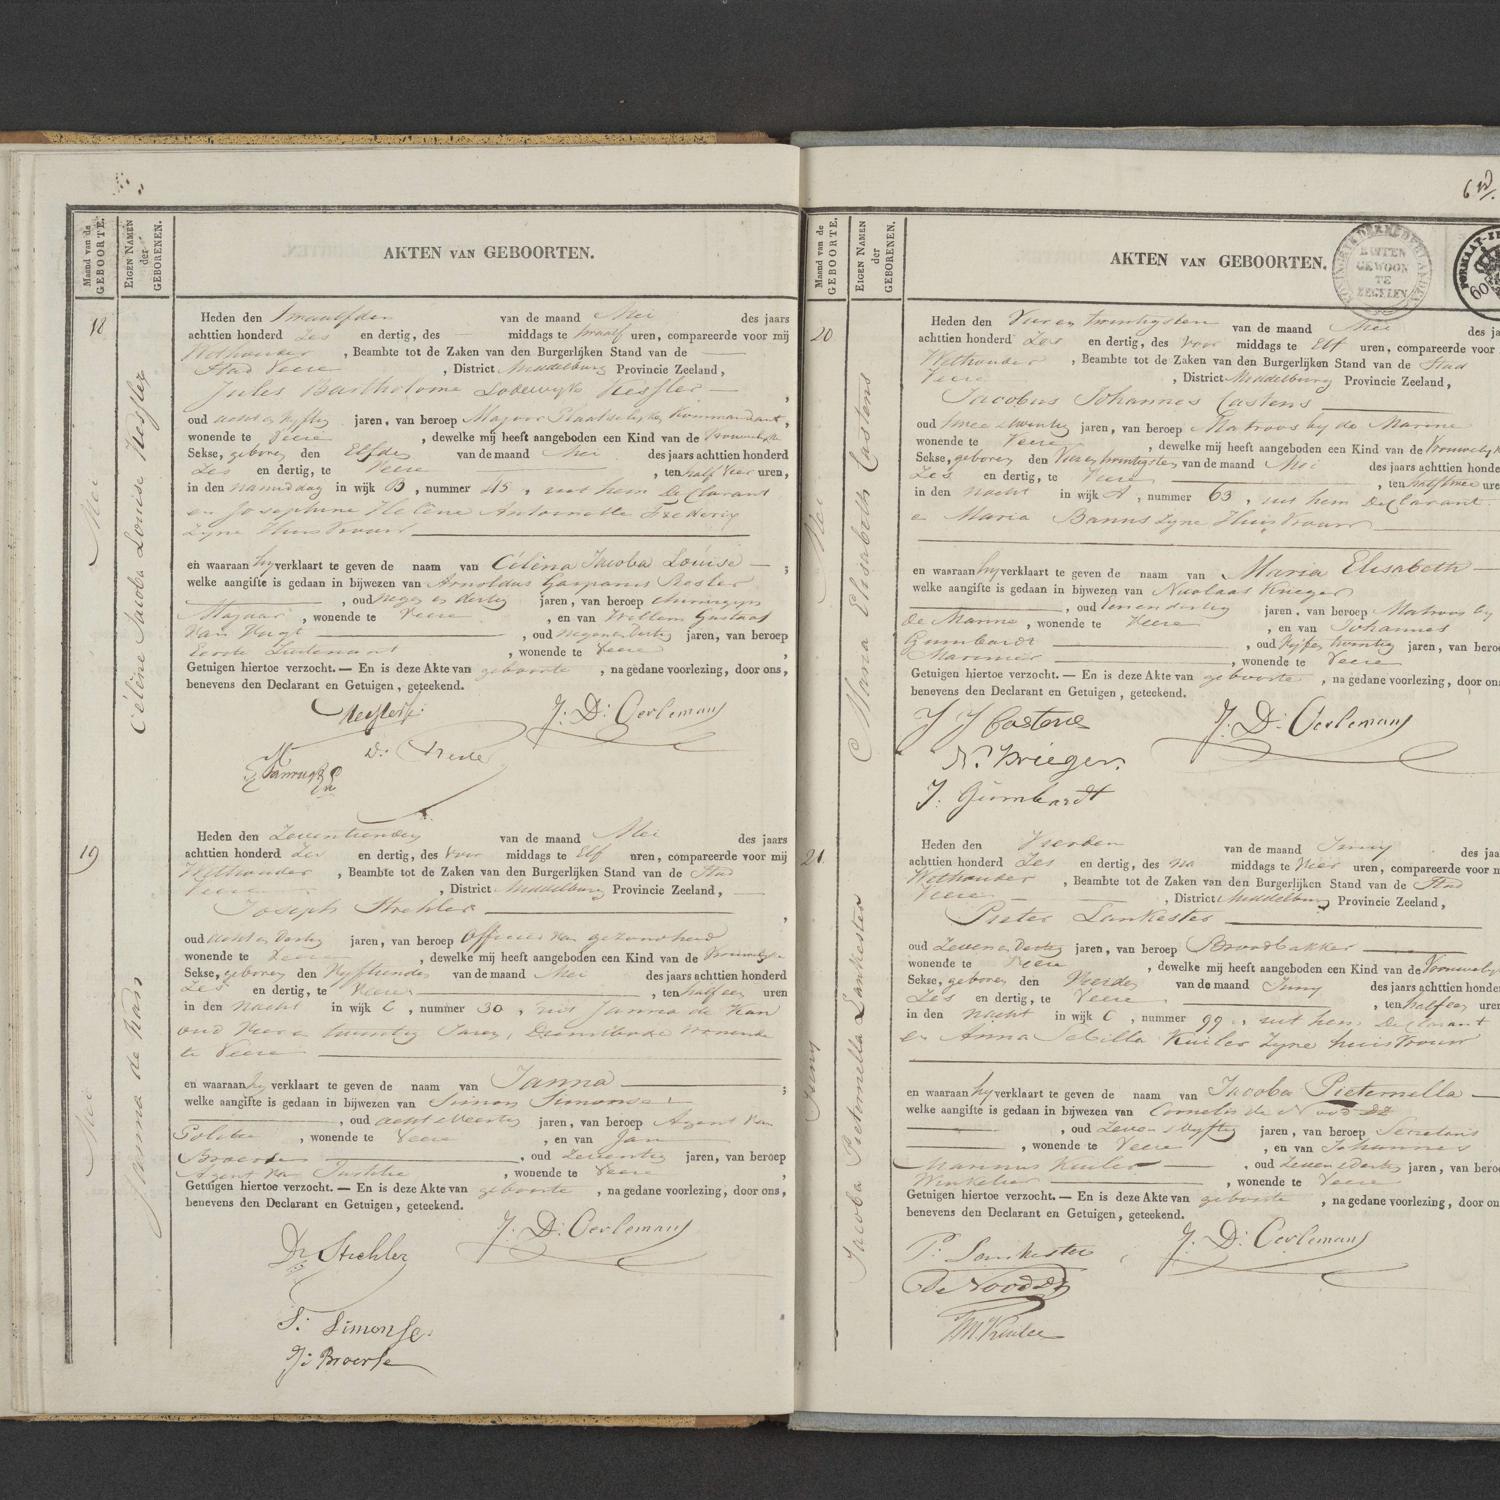 Civil registry of births, Veere, 1836, records 18-21